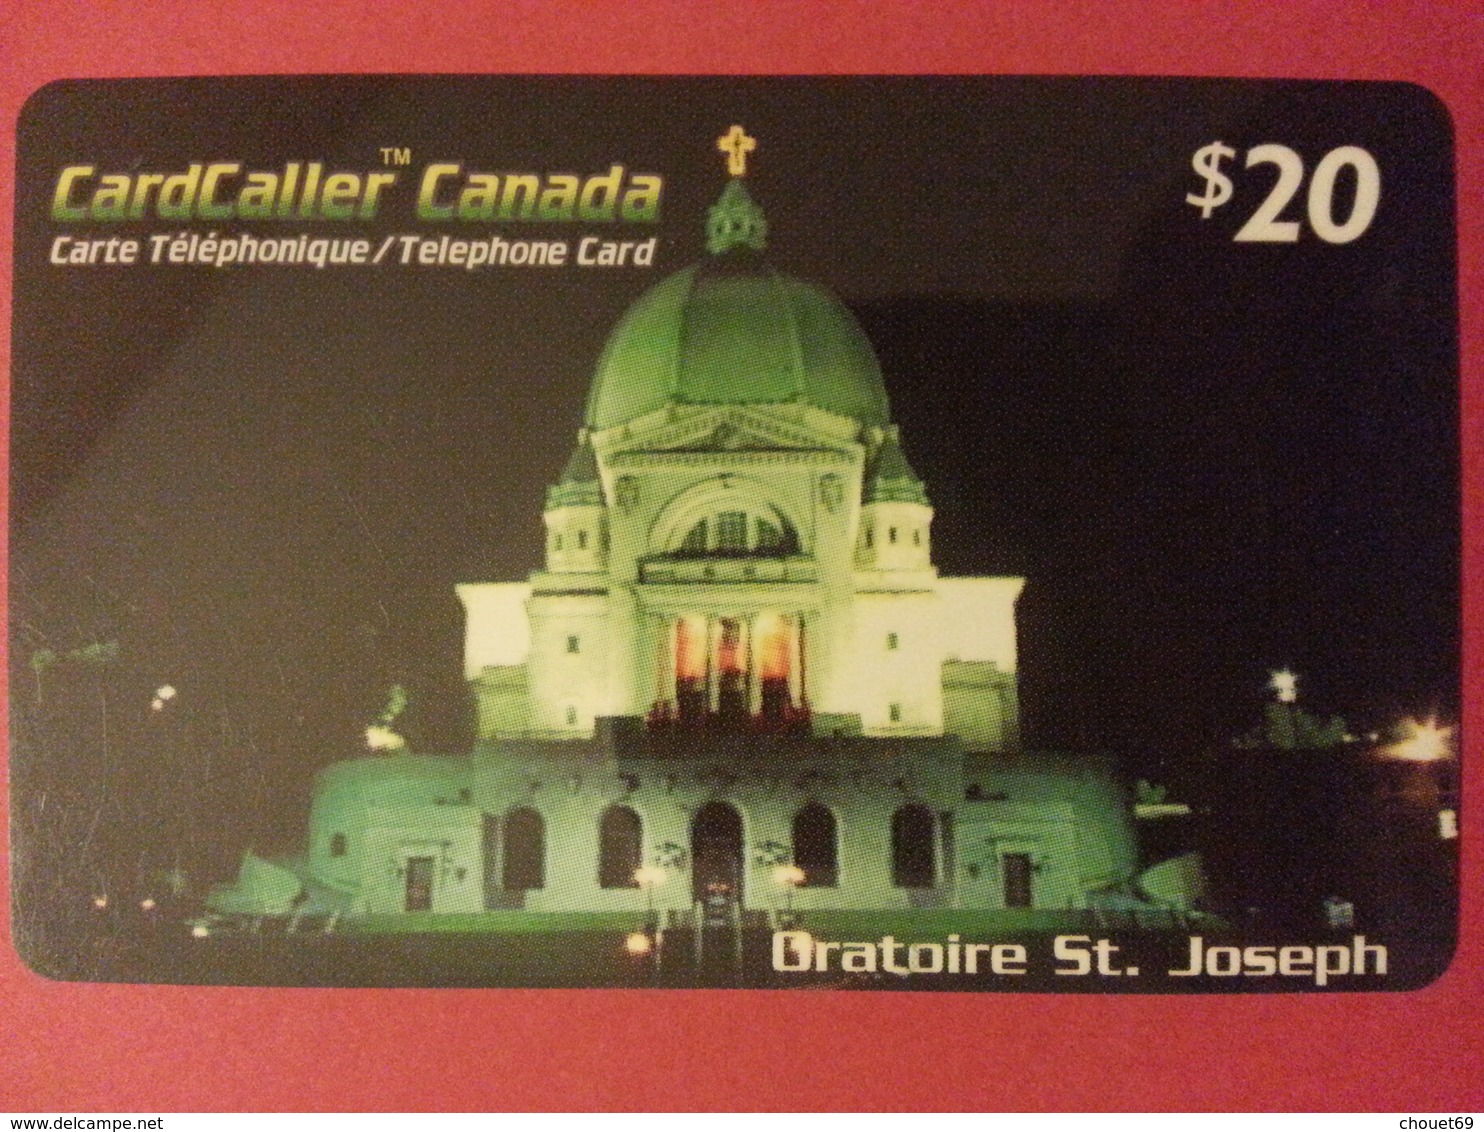 Cardcaller Canada Prepaid Oratoire St Joseph  (B0615 - Unknown Origin